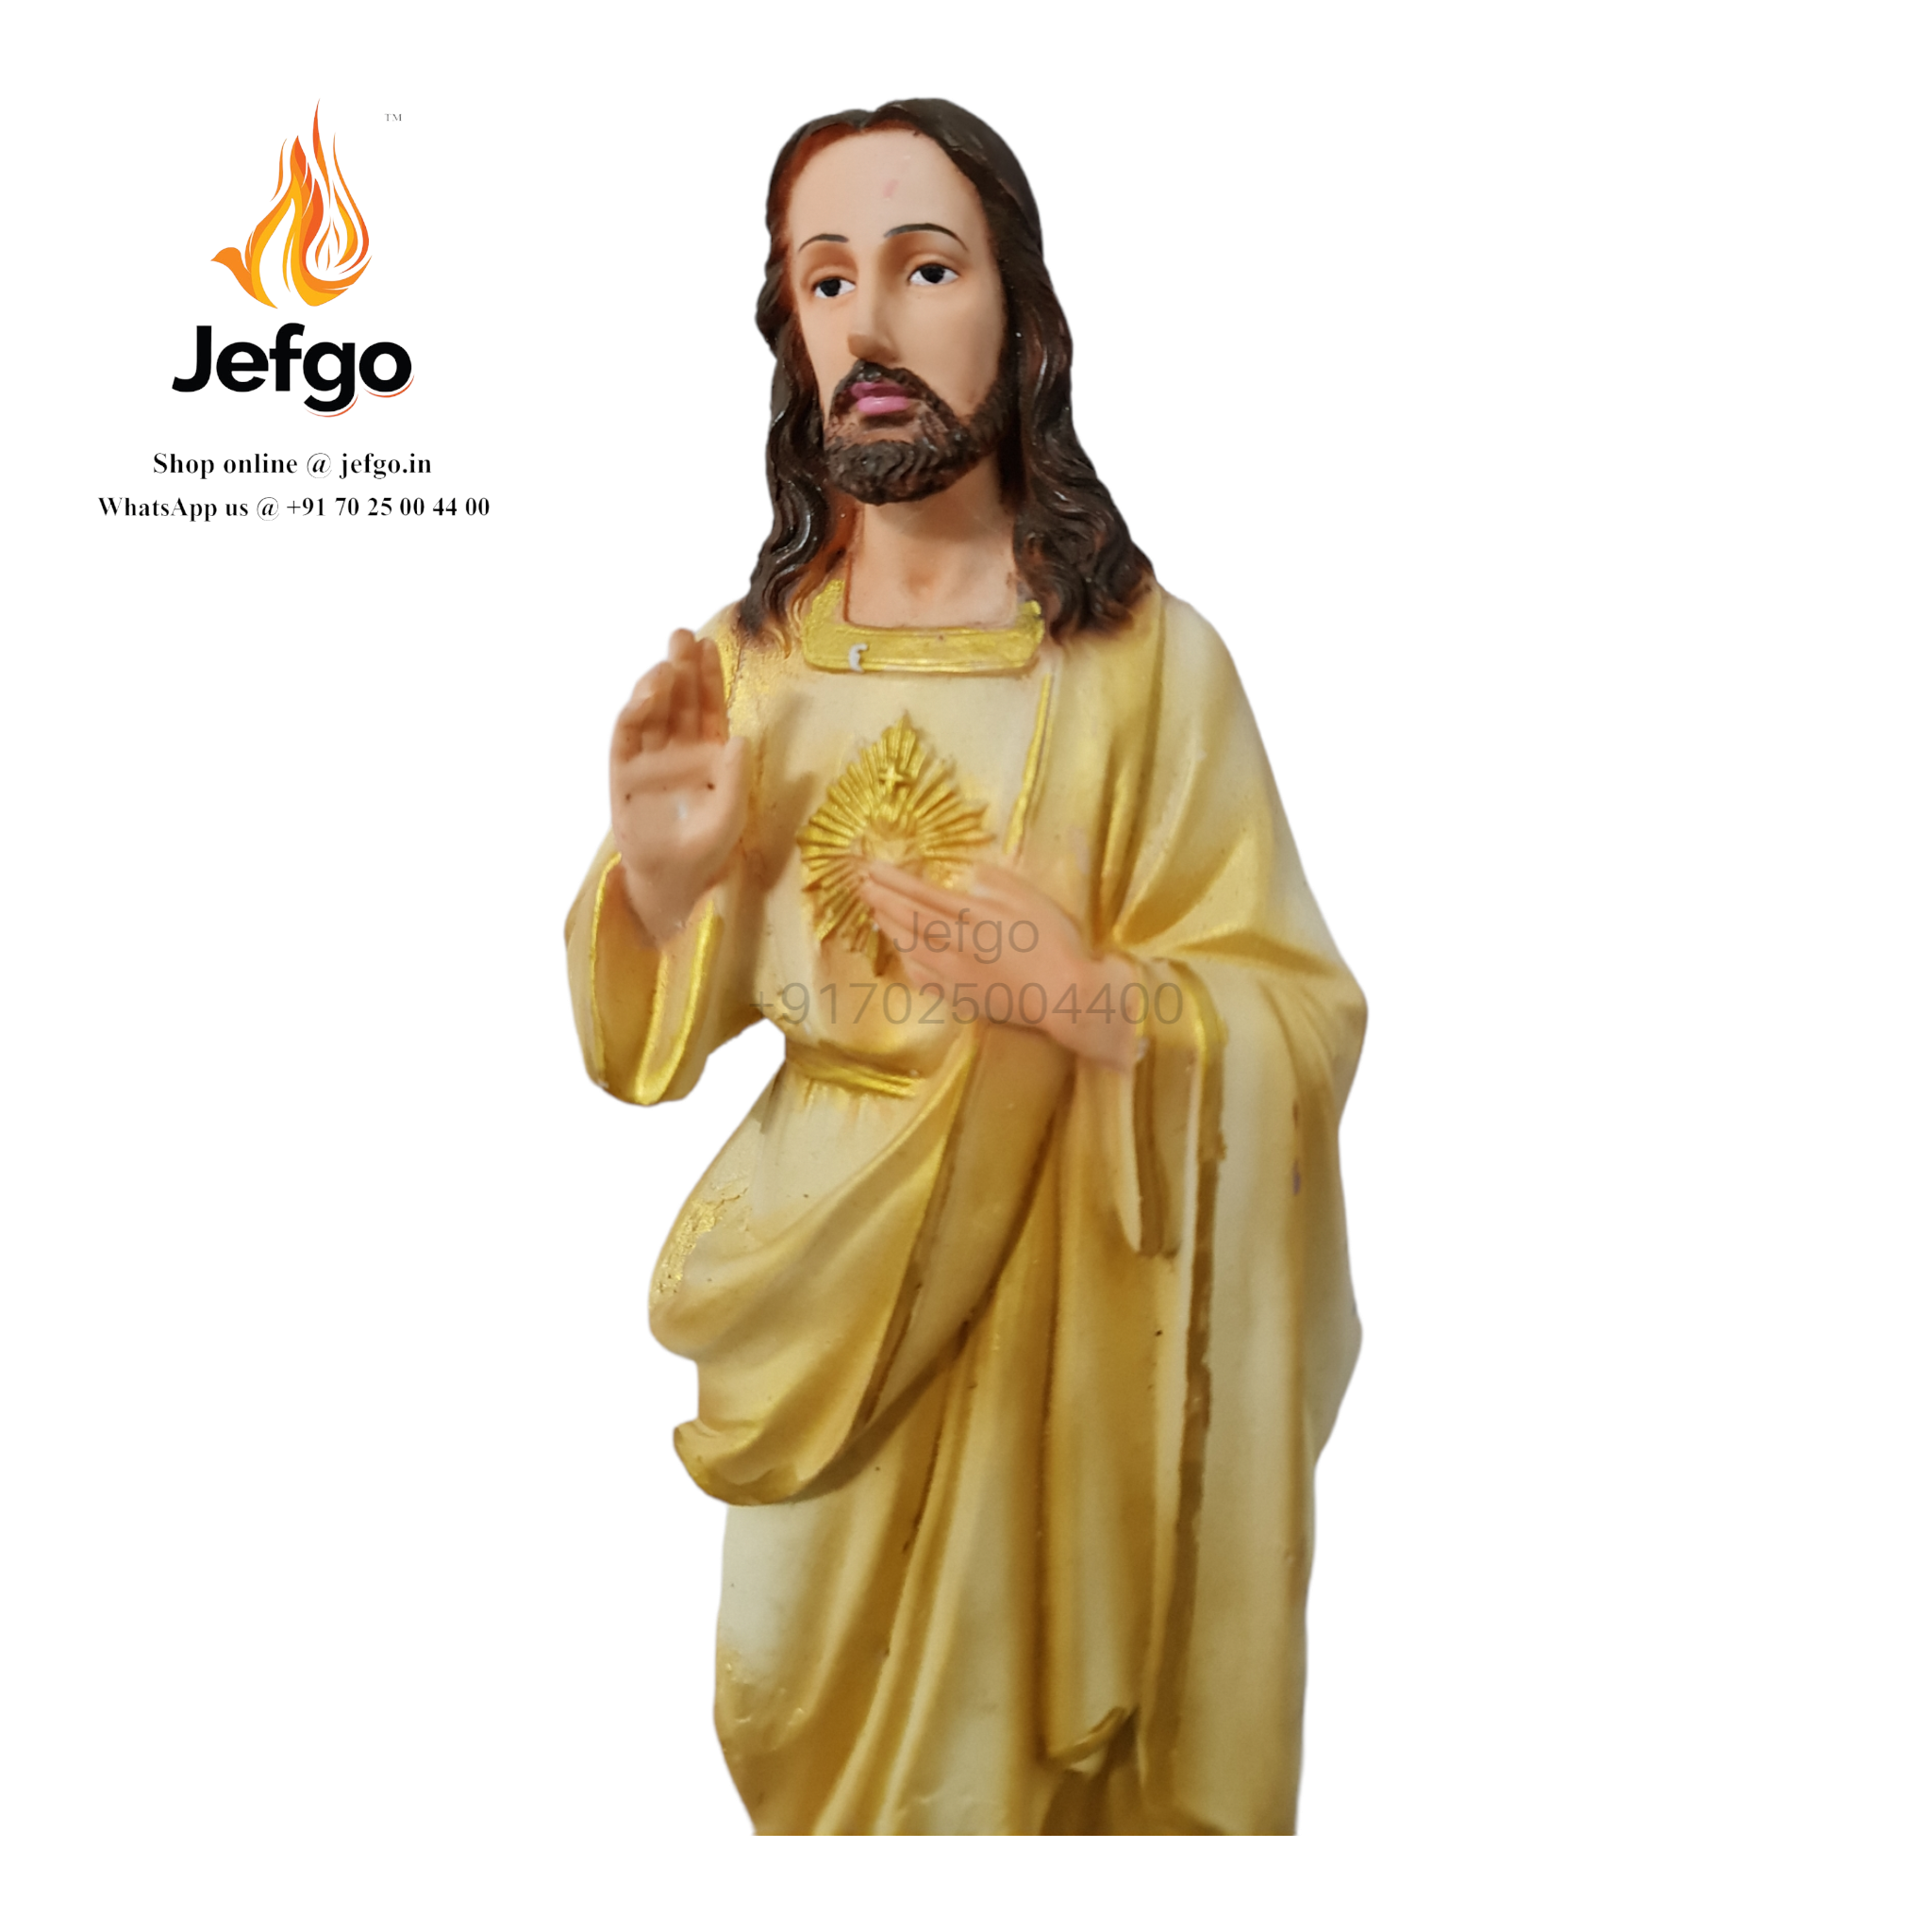  Buy Jesus sacred Heart Statue 